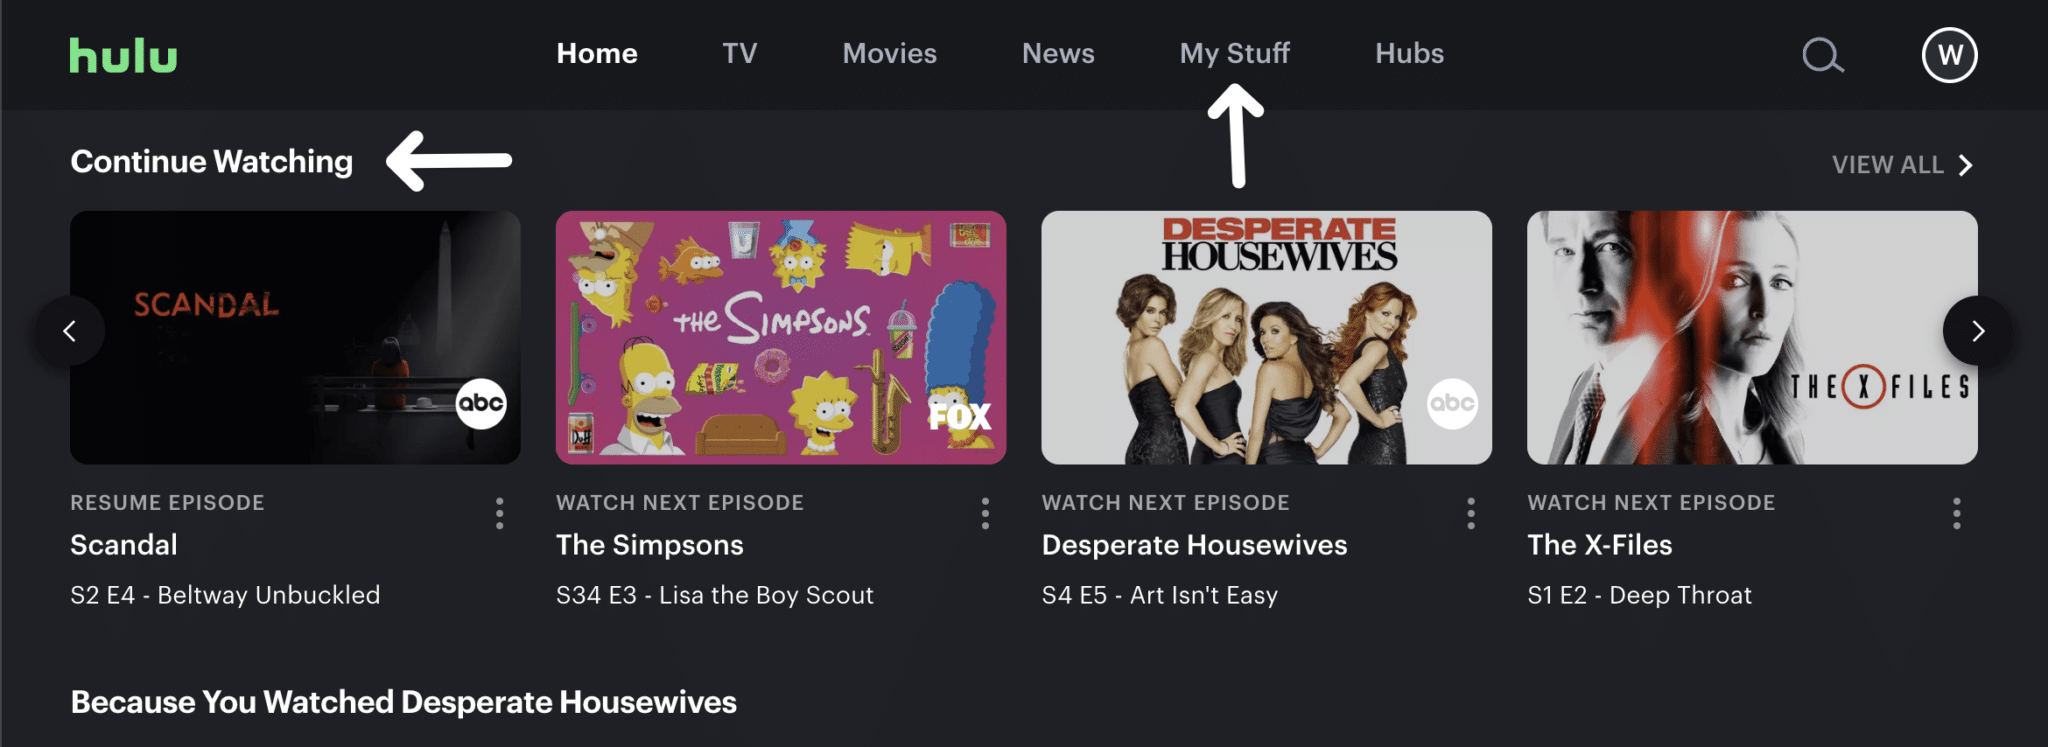 Hulu "Keep Watching" or "My Stuff" list